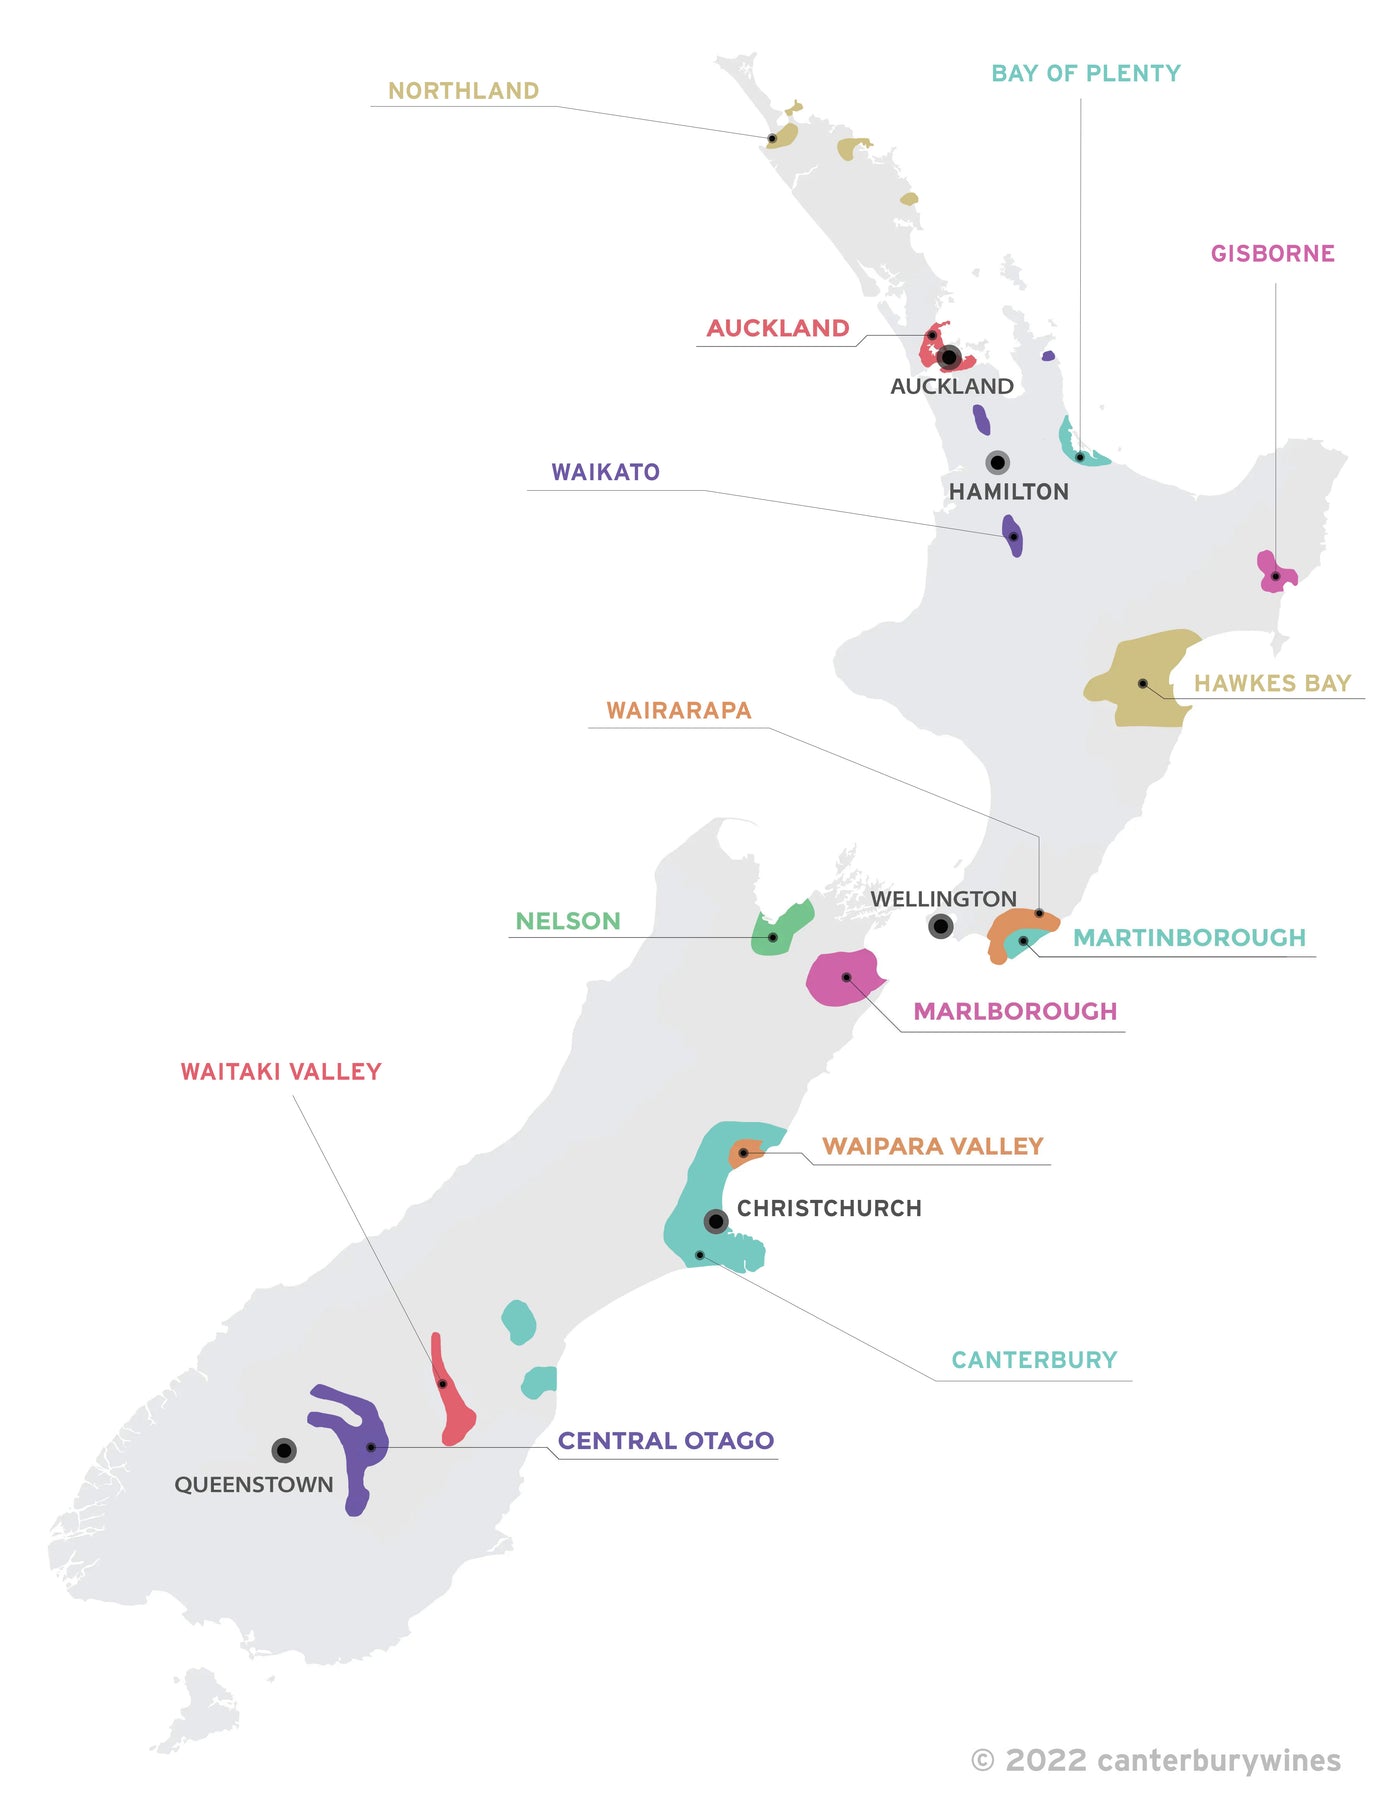 Wine region map of New Zealand